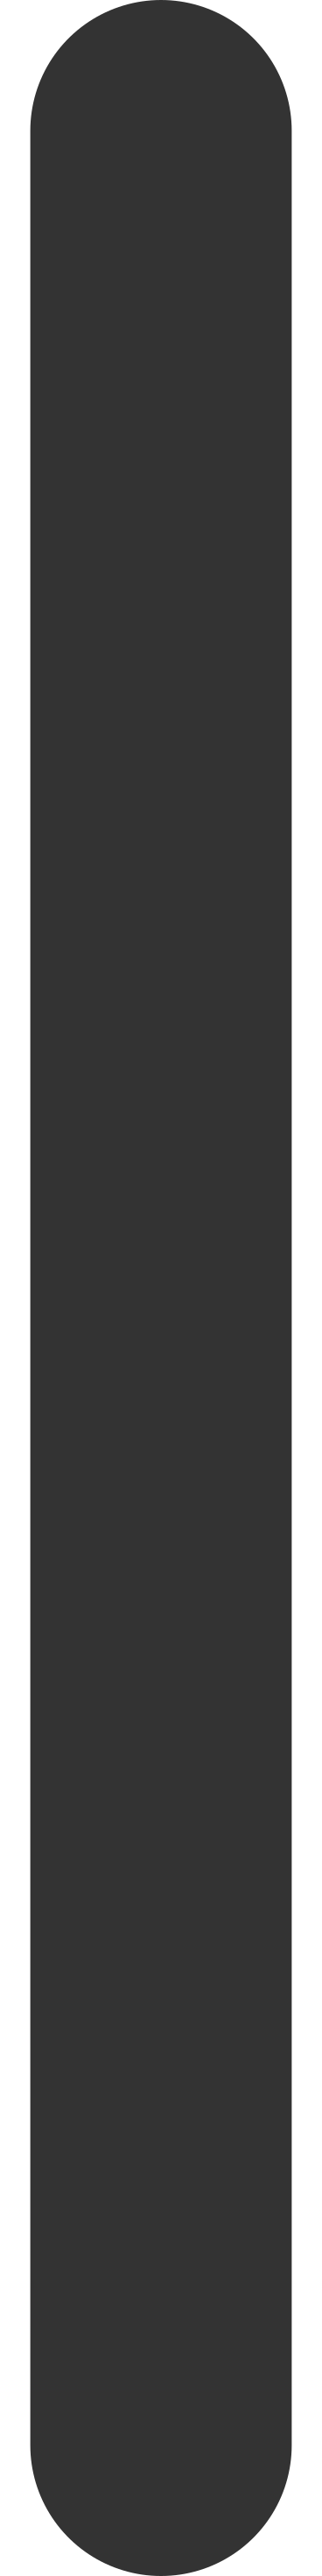 Черная линия в PNG, SVG